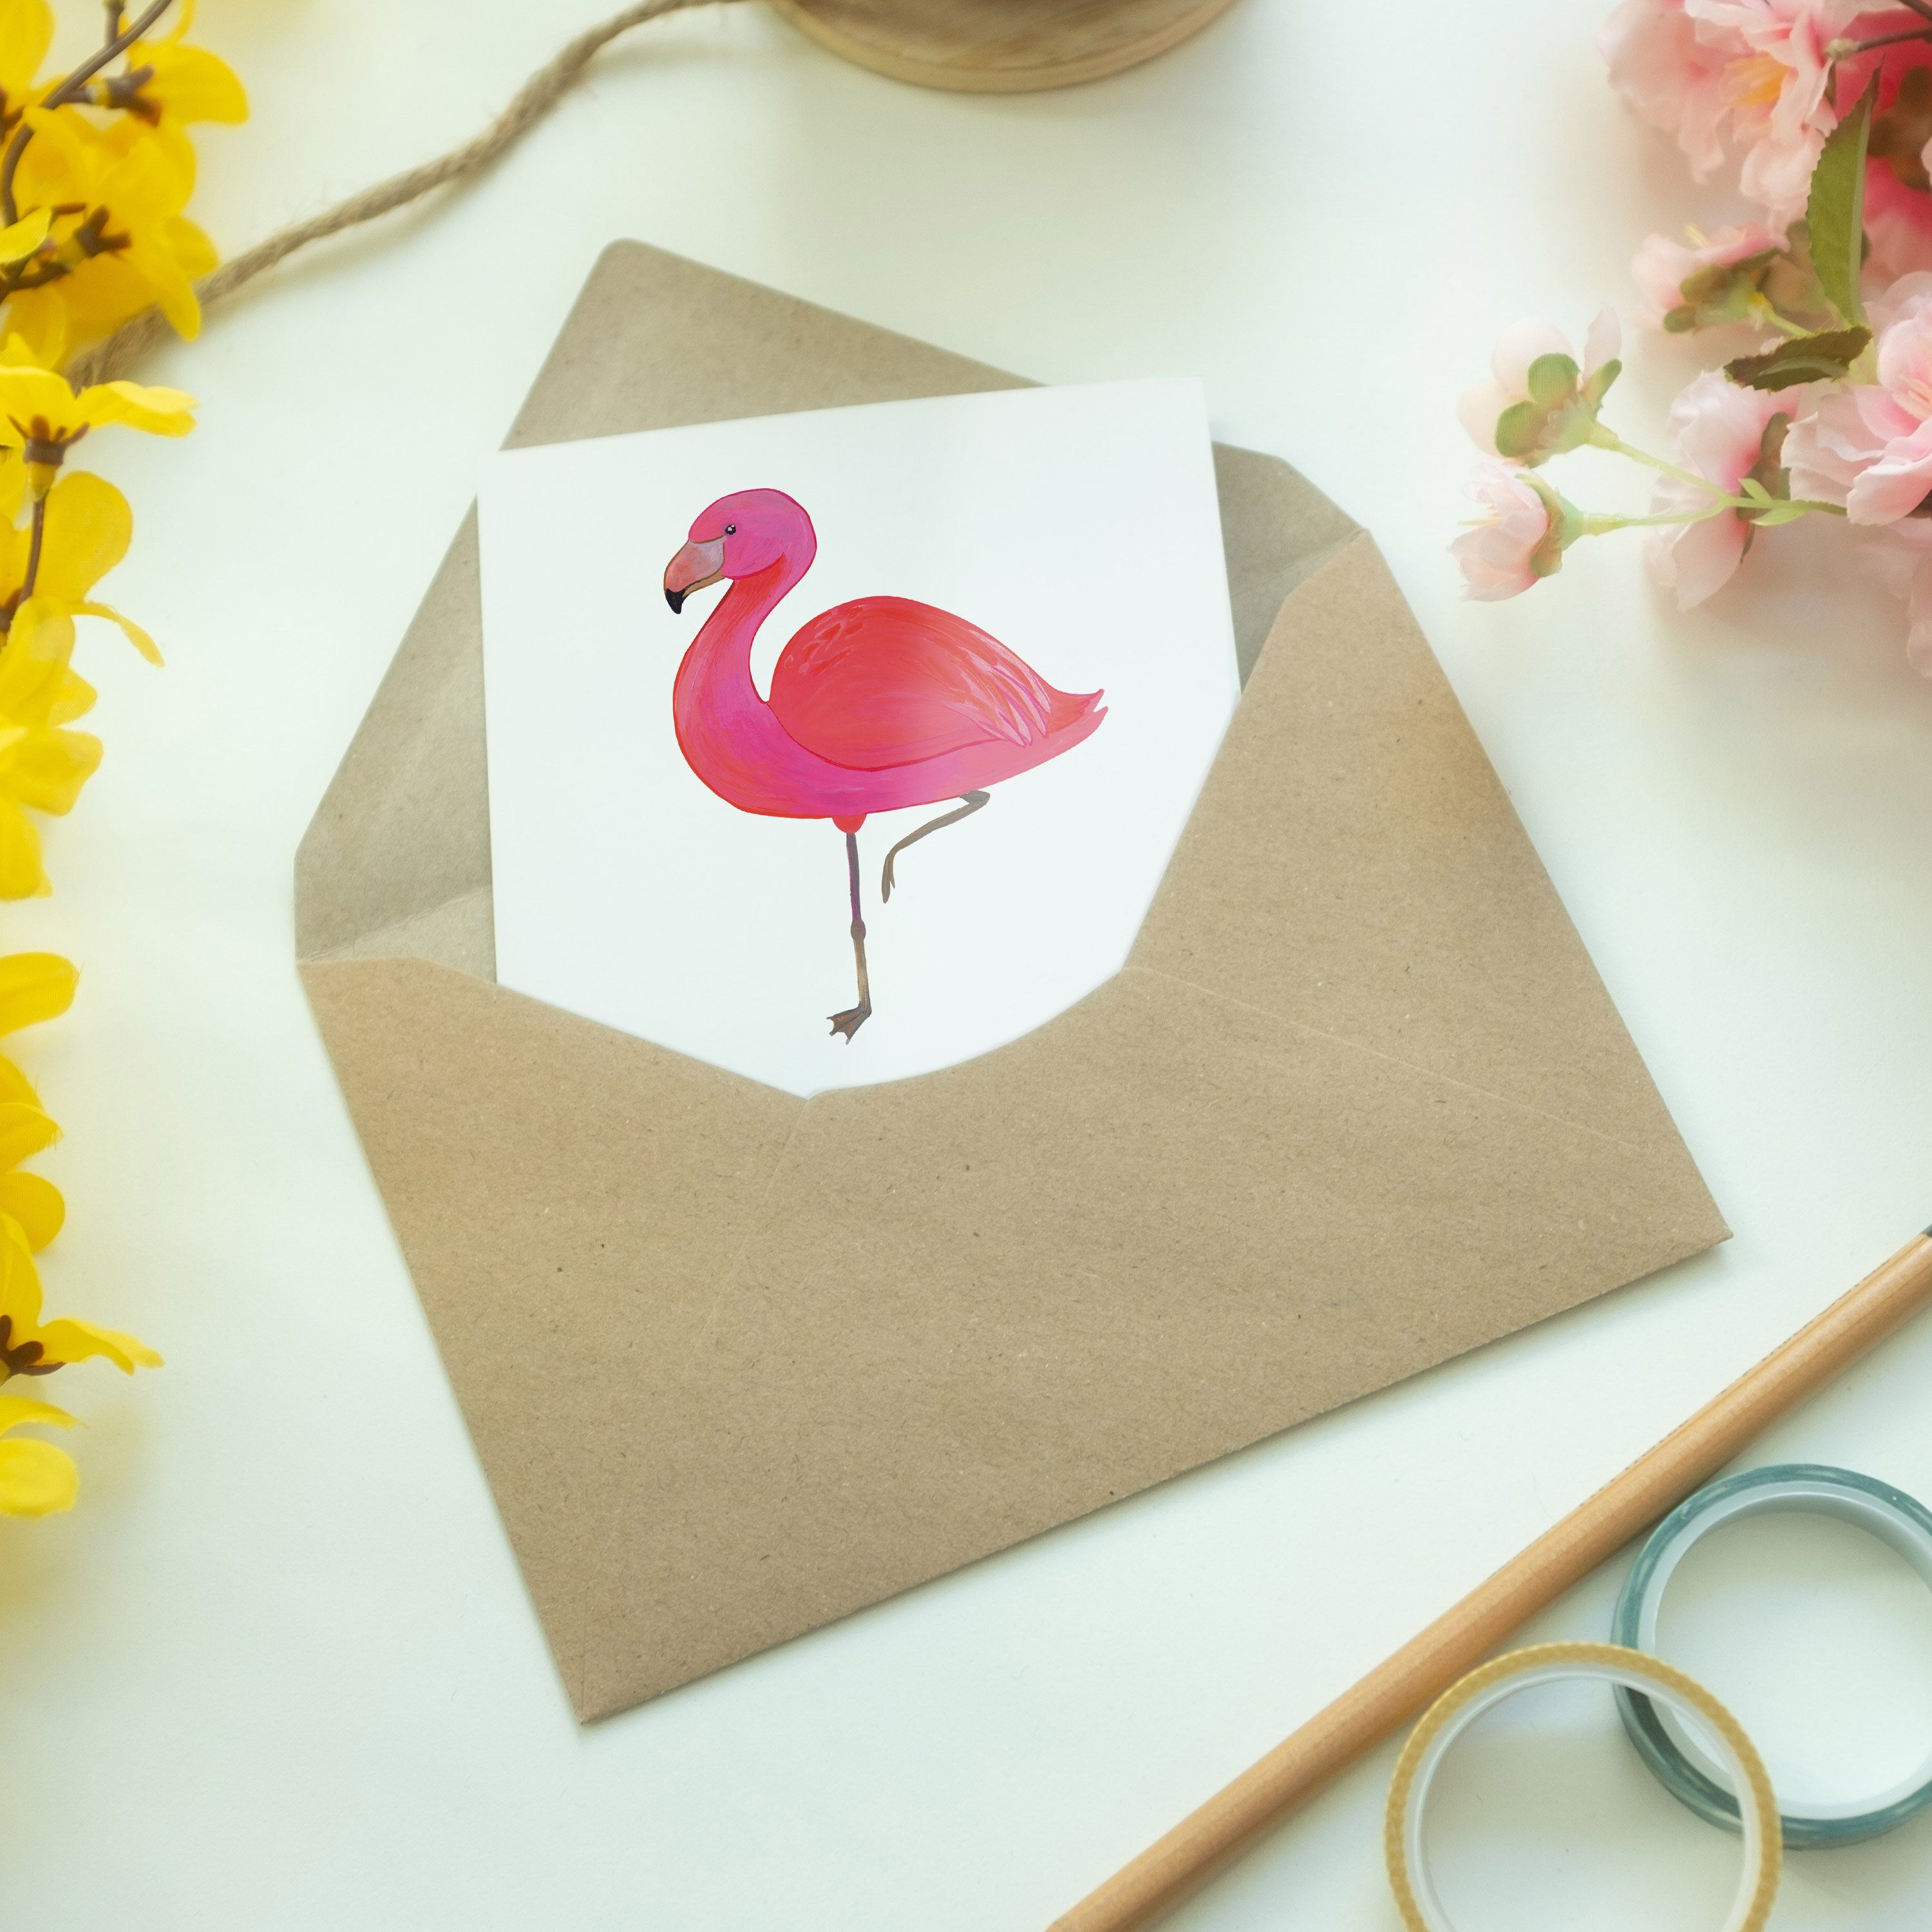 Mr. & Mrs. Panda - Karte, Geburtstagskarte, Flamingo Weiß Grußkarte classic Geschenk, - glücklic